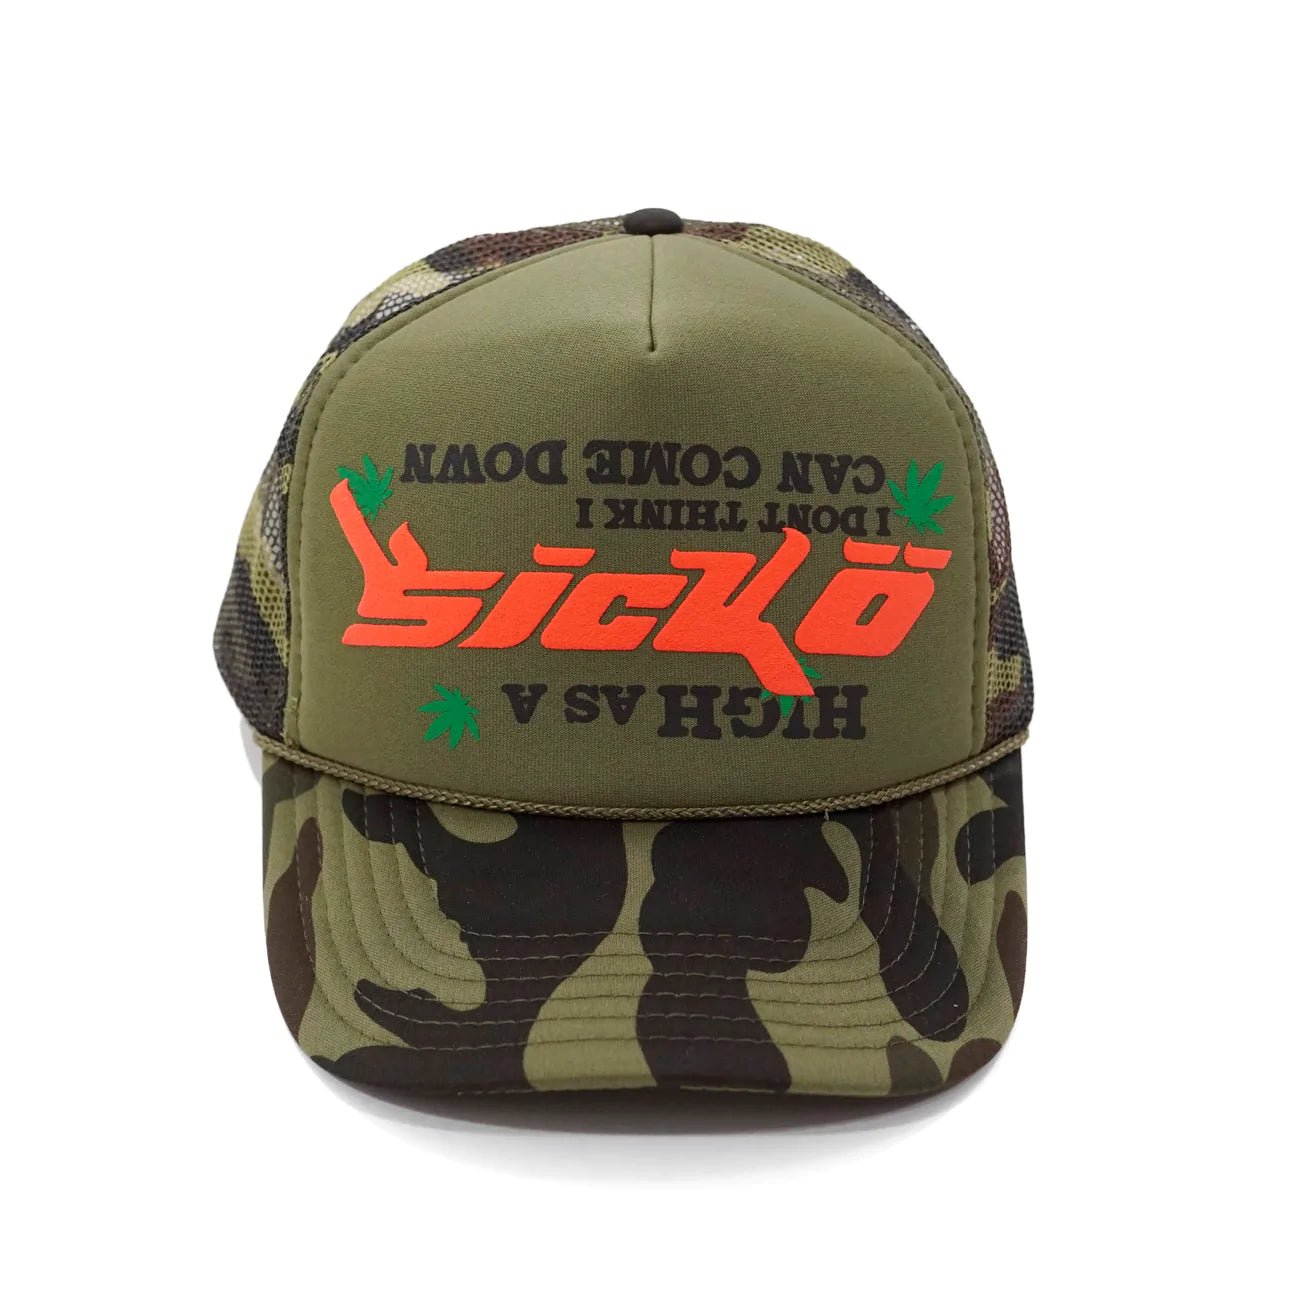 Sicko Laundry High Trucker Hat 2 - Dark Camo - Sneakersbe Sneakers Sale Online